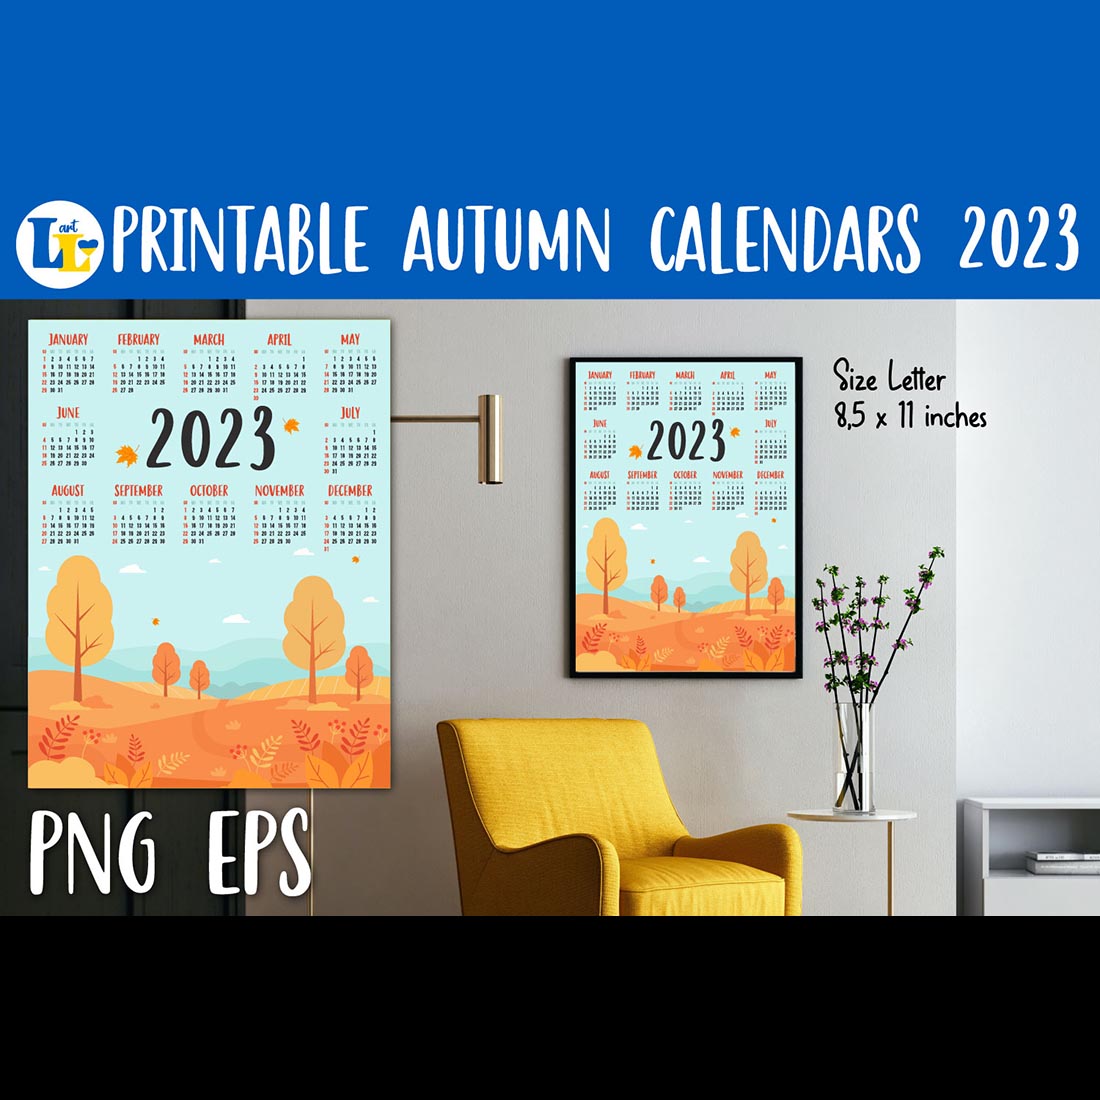 Printable Autumn Wall Calendar cover image.